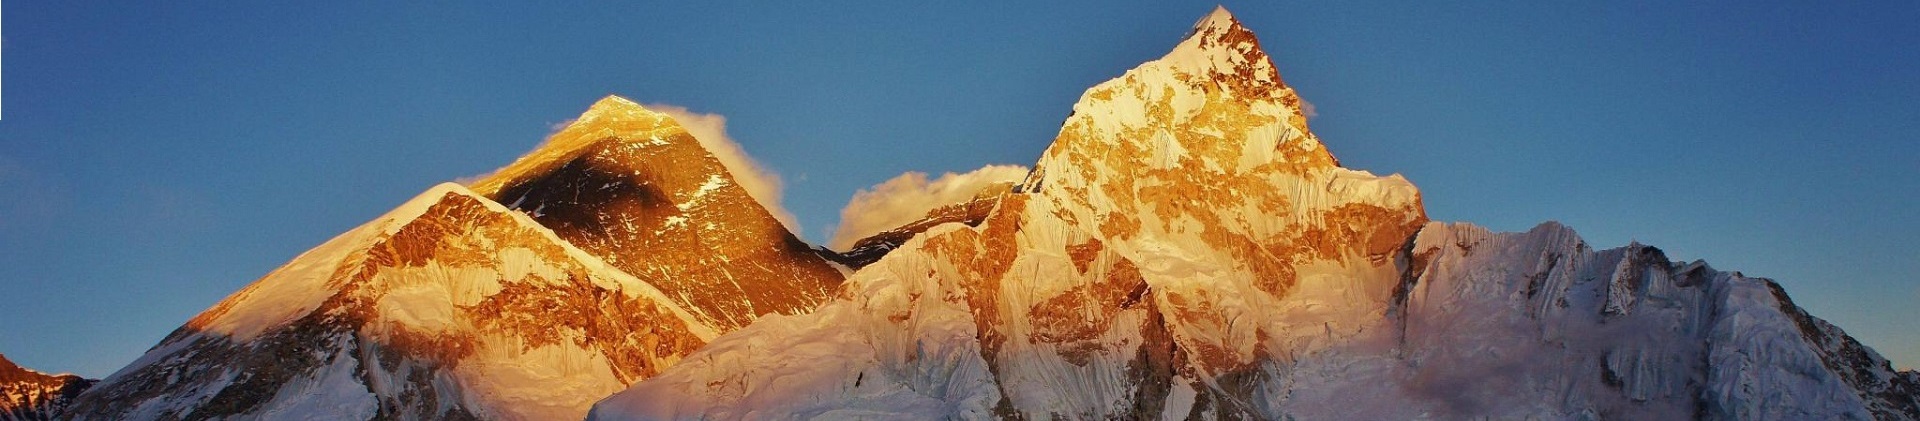 Mount Everest, Gold Peak